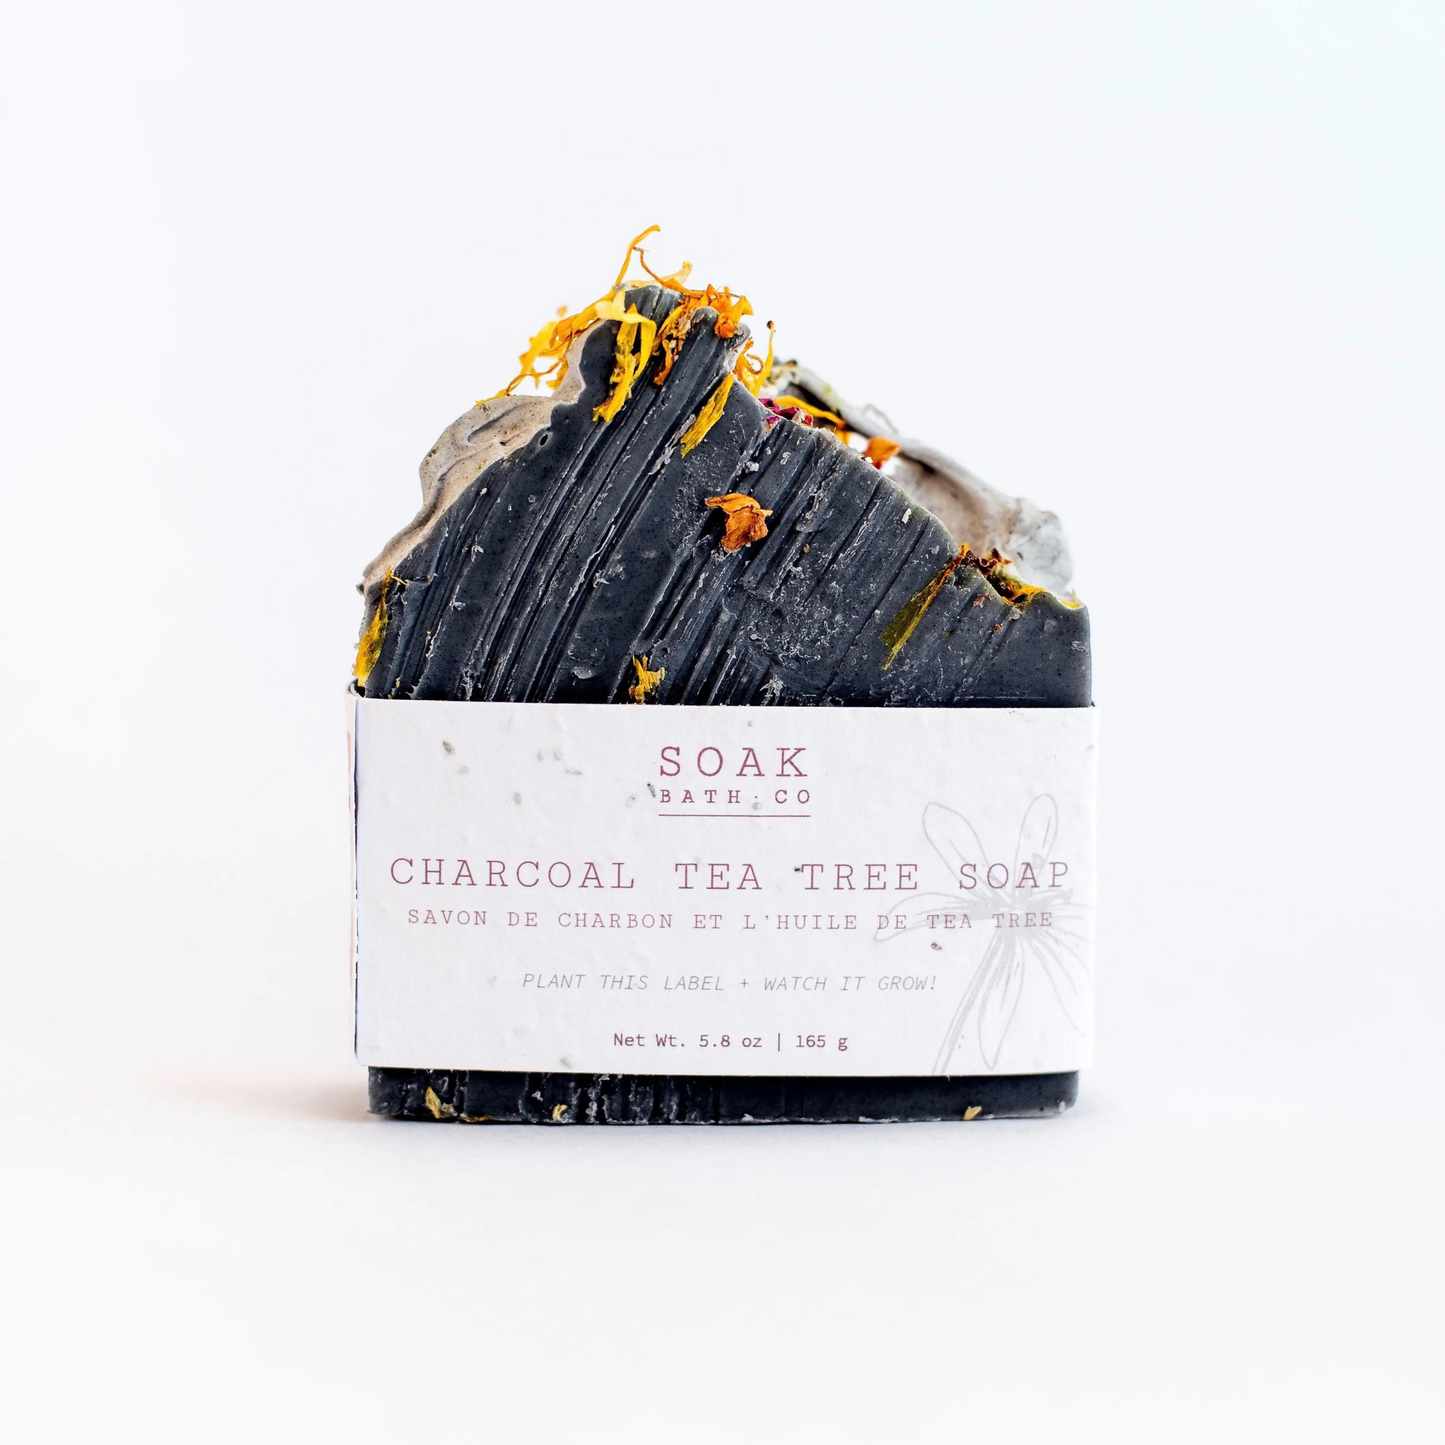 Charcoal Tea Tree Soap - Plantable Label